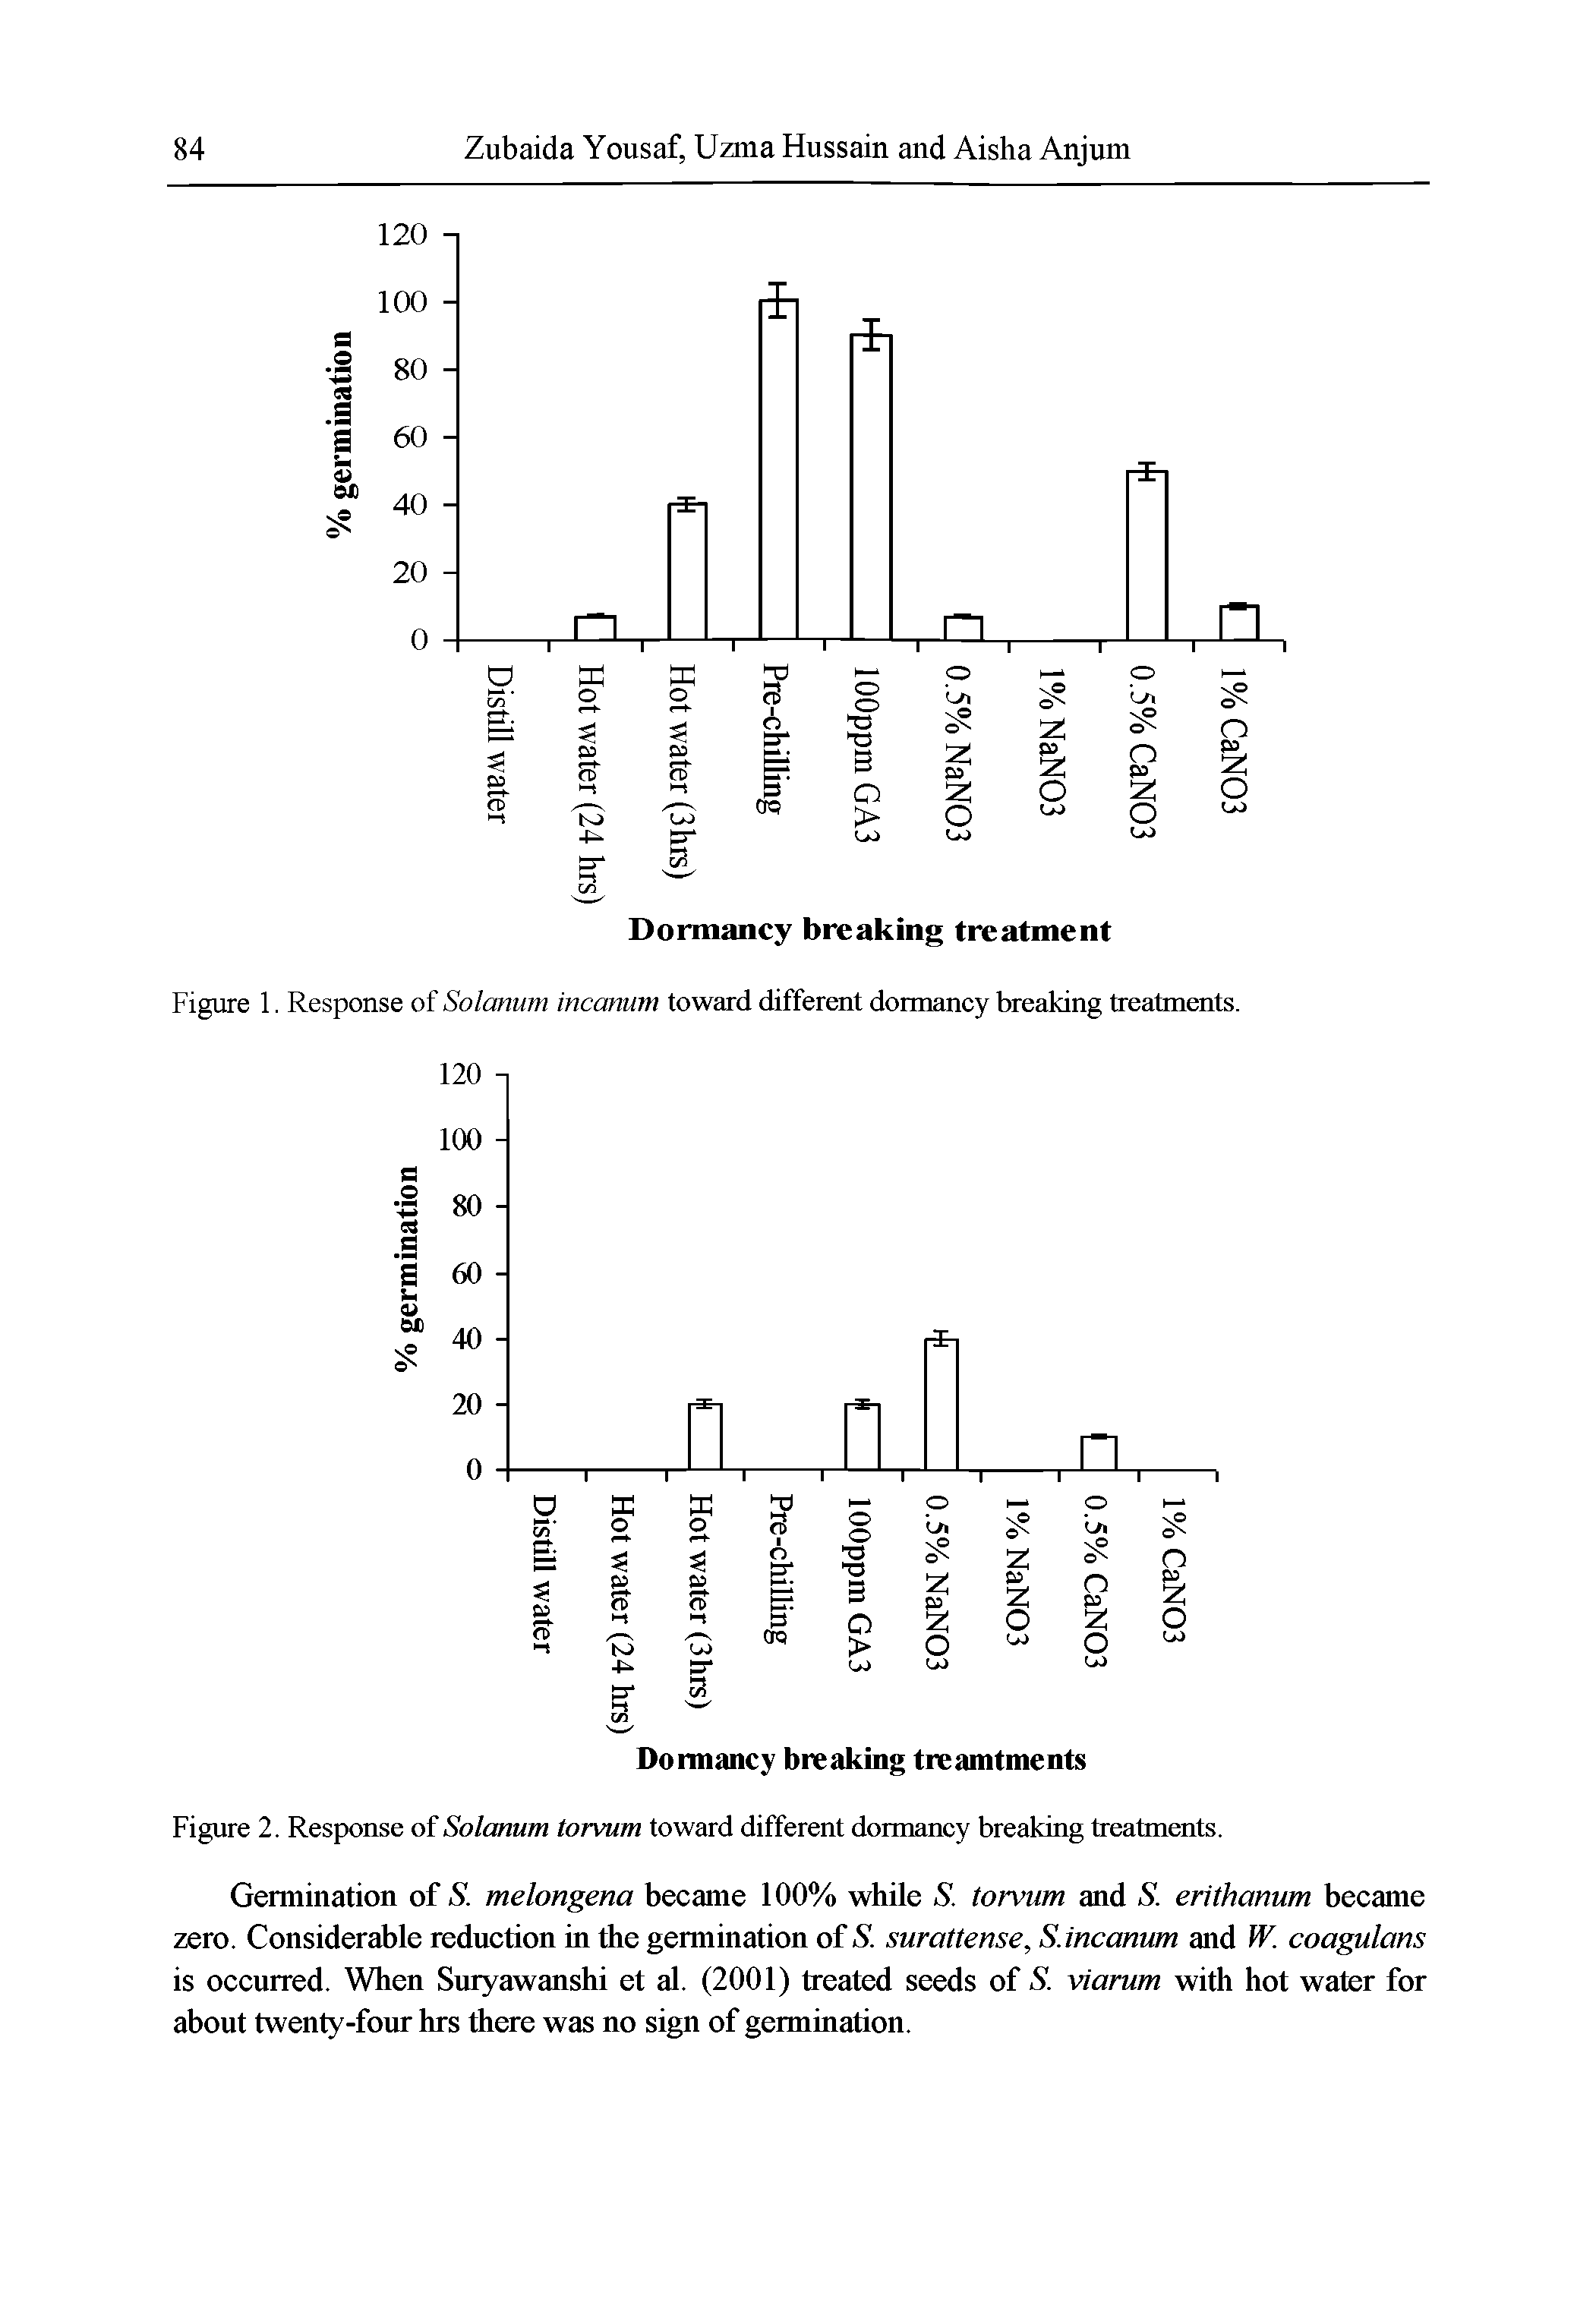 Figure 1. Response of Solanum incanum toward different dormancy breaking treatments.